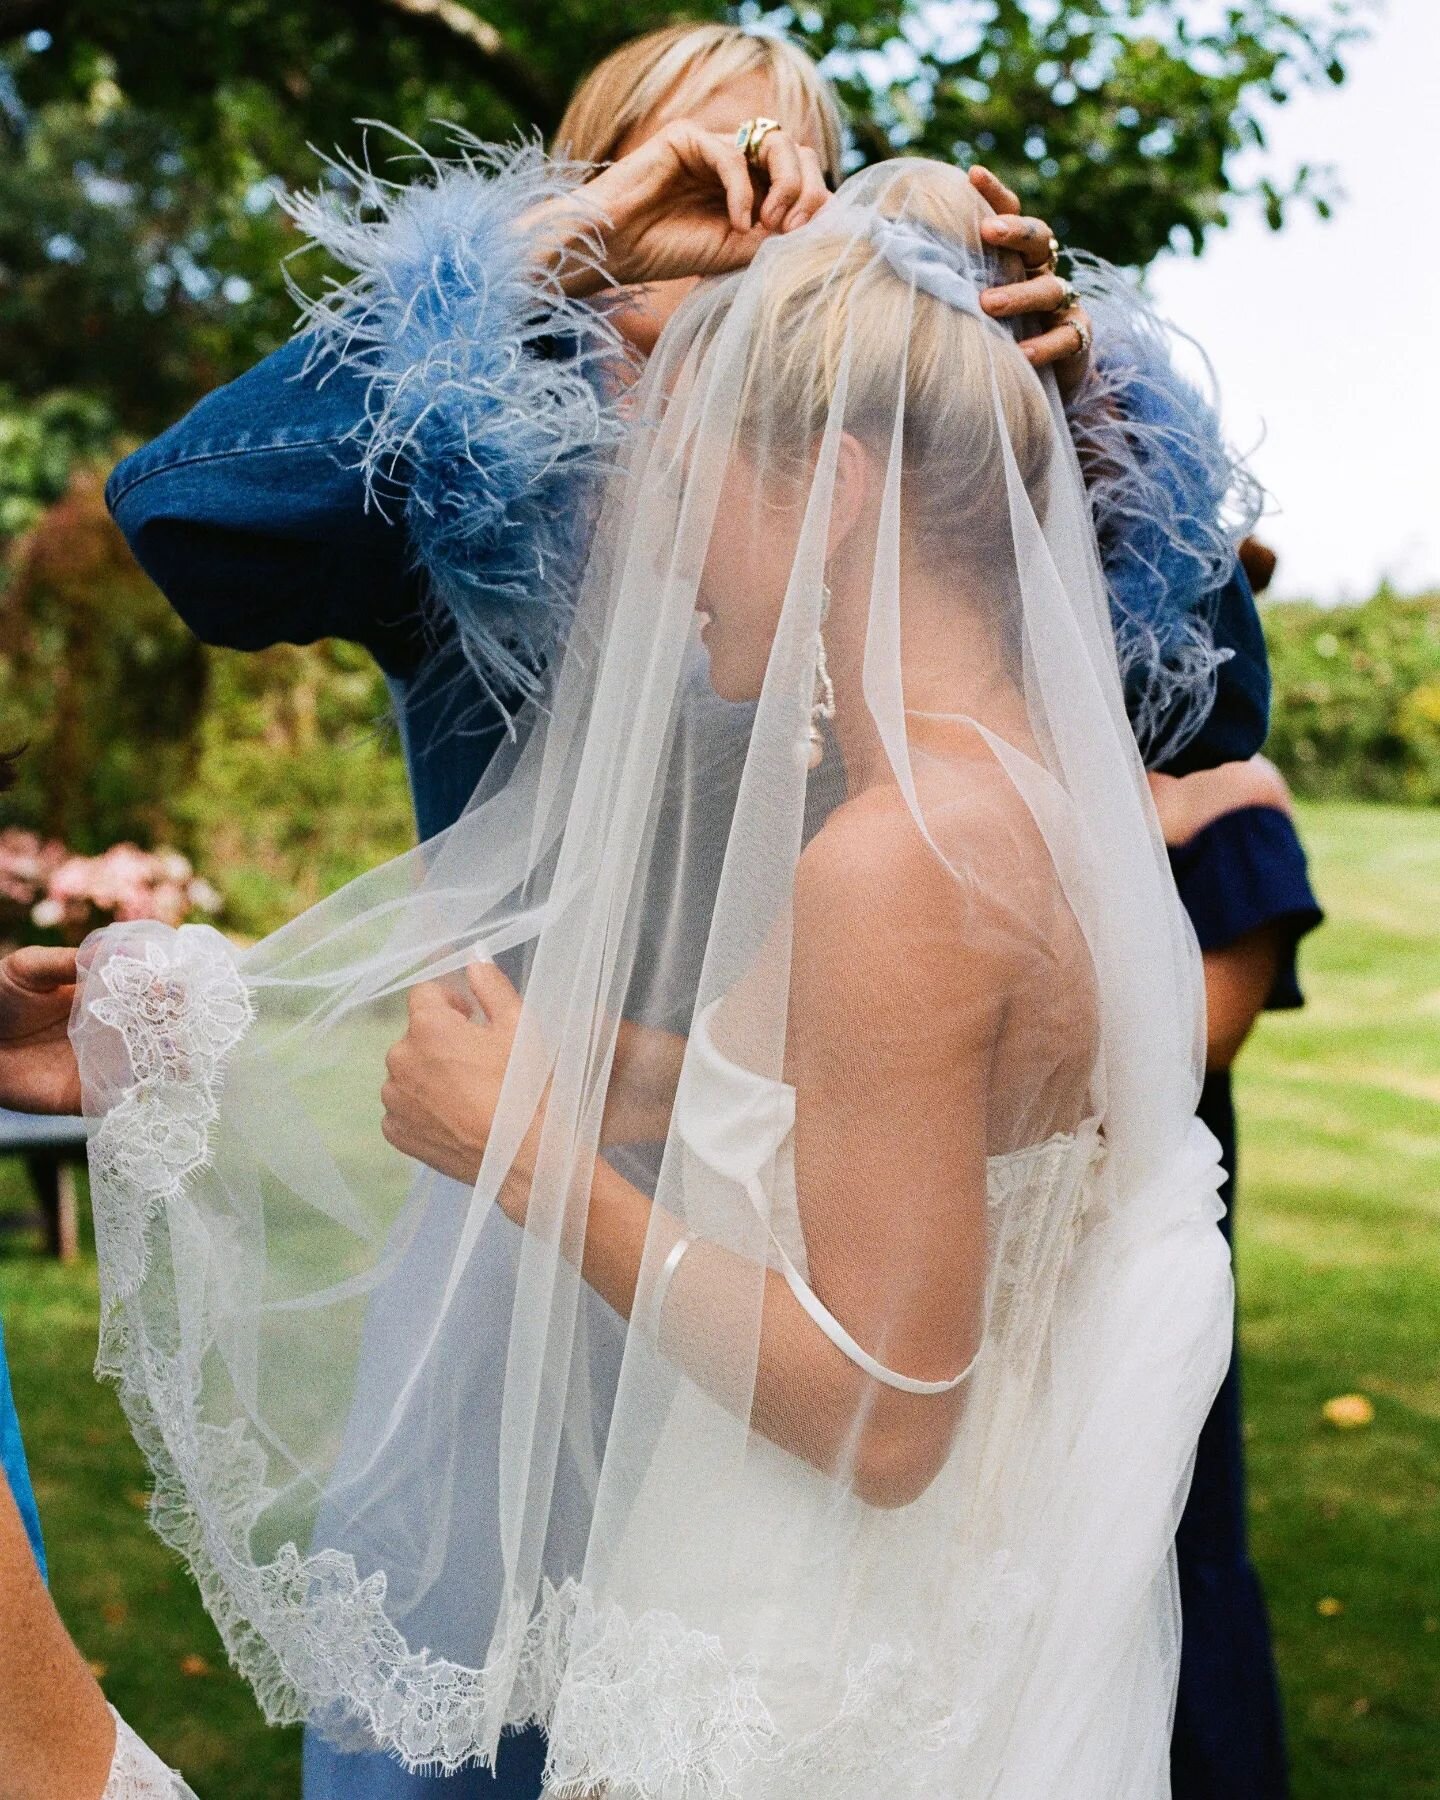 ✨ New blog - Susanna &amp; Jack's wedding on 35mm film 🎞️ Head to the link in my bio to view.
.
#londonweddingphotography #londonwedding #wedphotoinspiration #realwedding #35mmfilmphotography #hybridweddingphotography #35mmfilm #suffolkweddingphotog